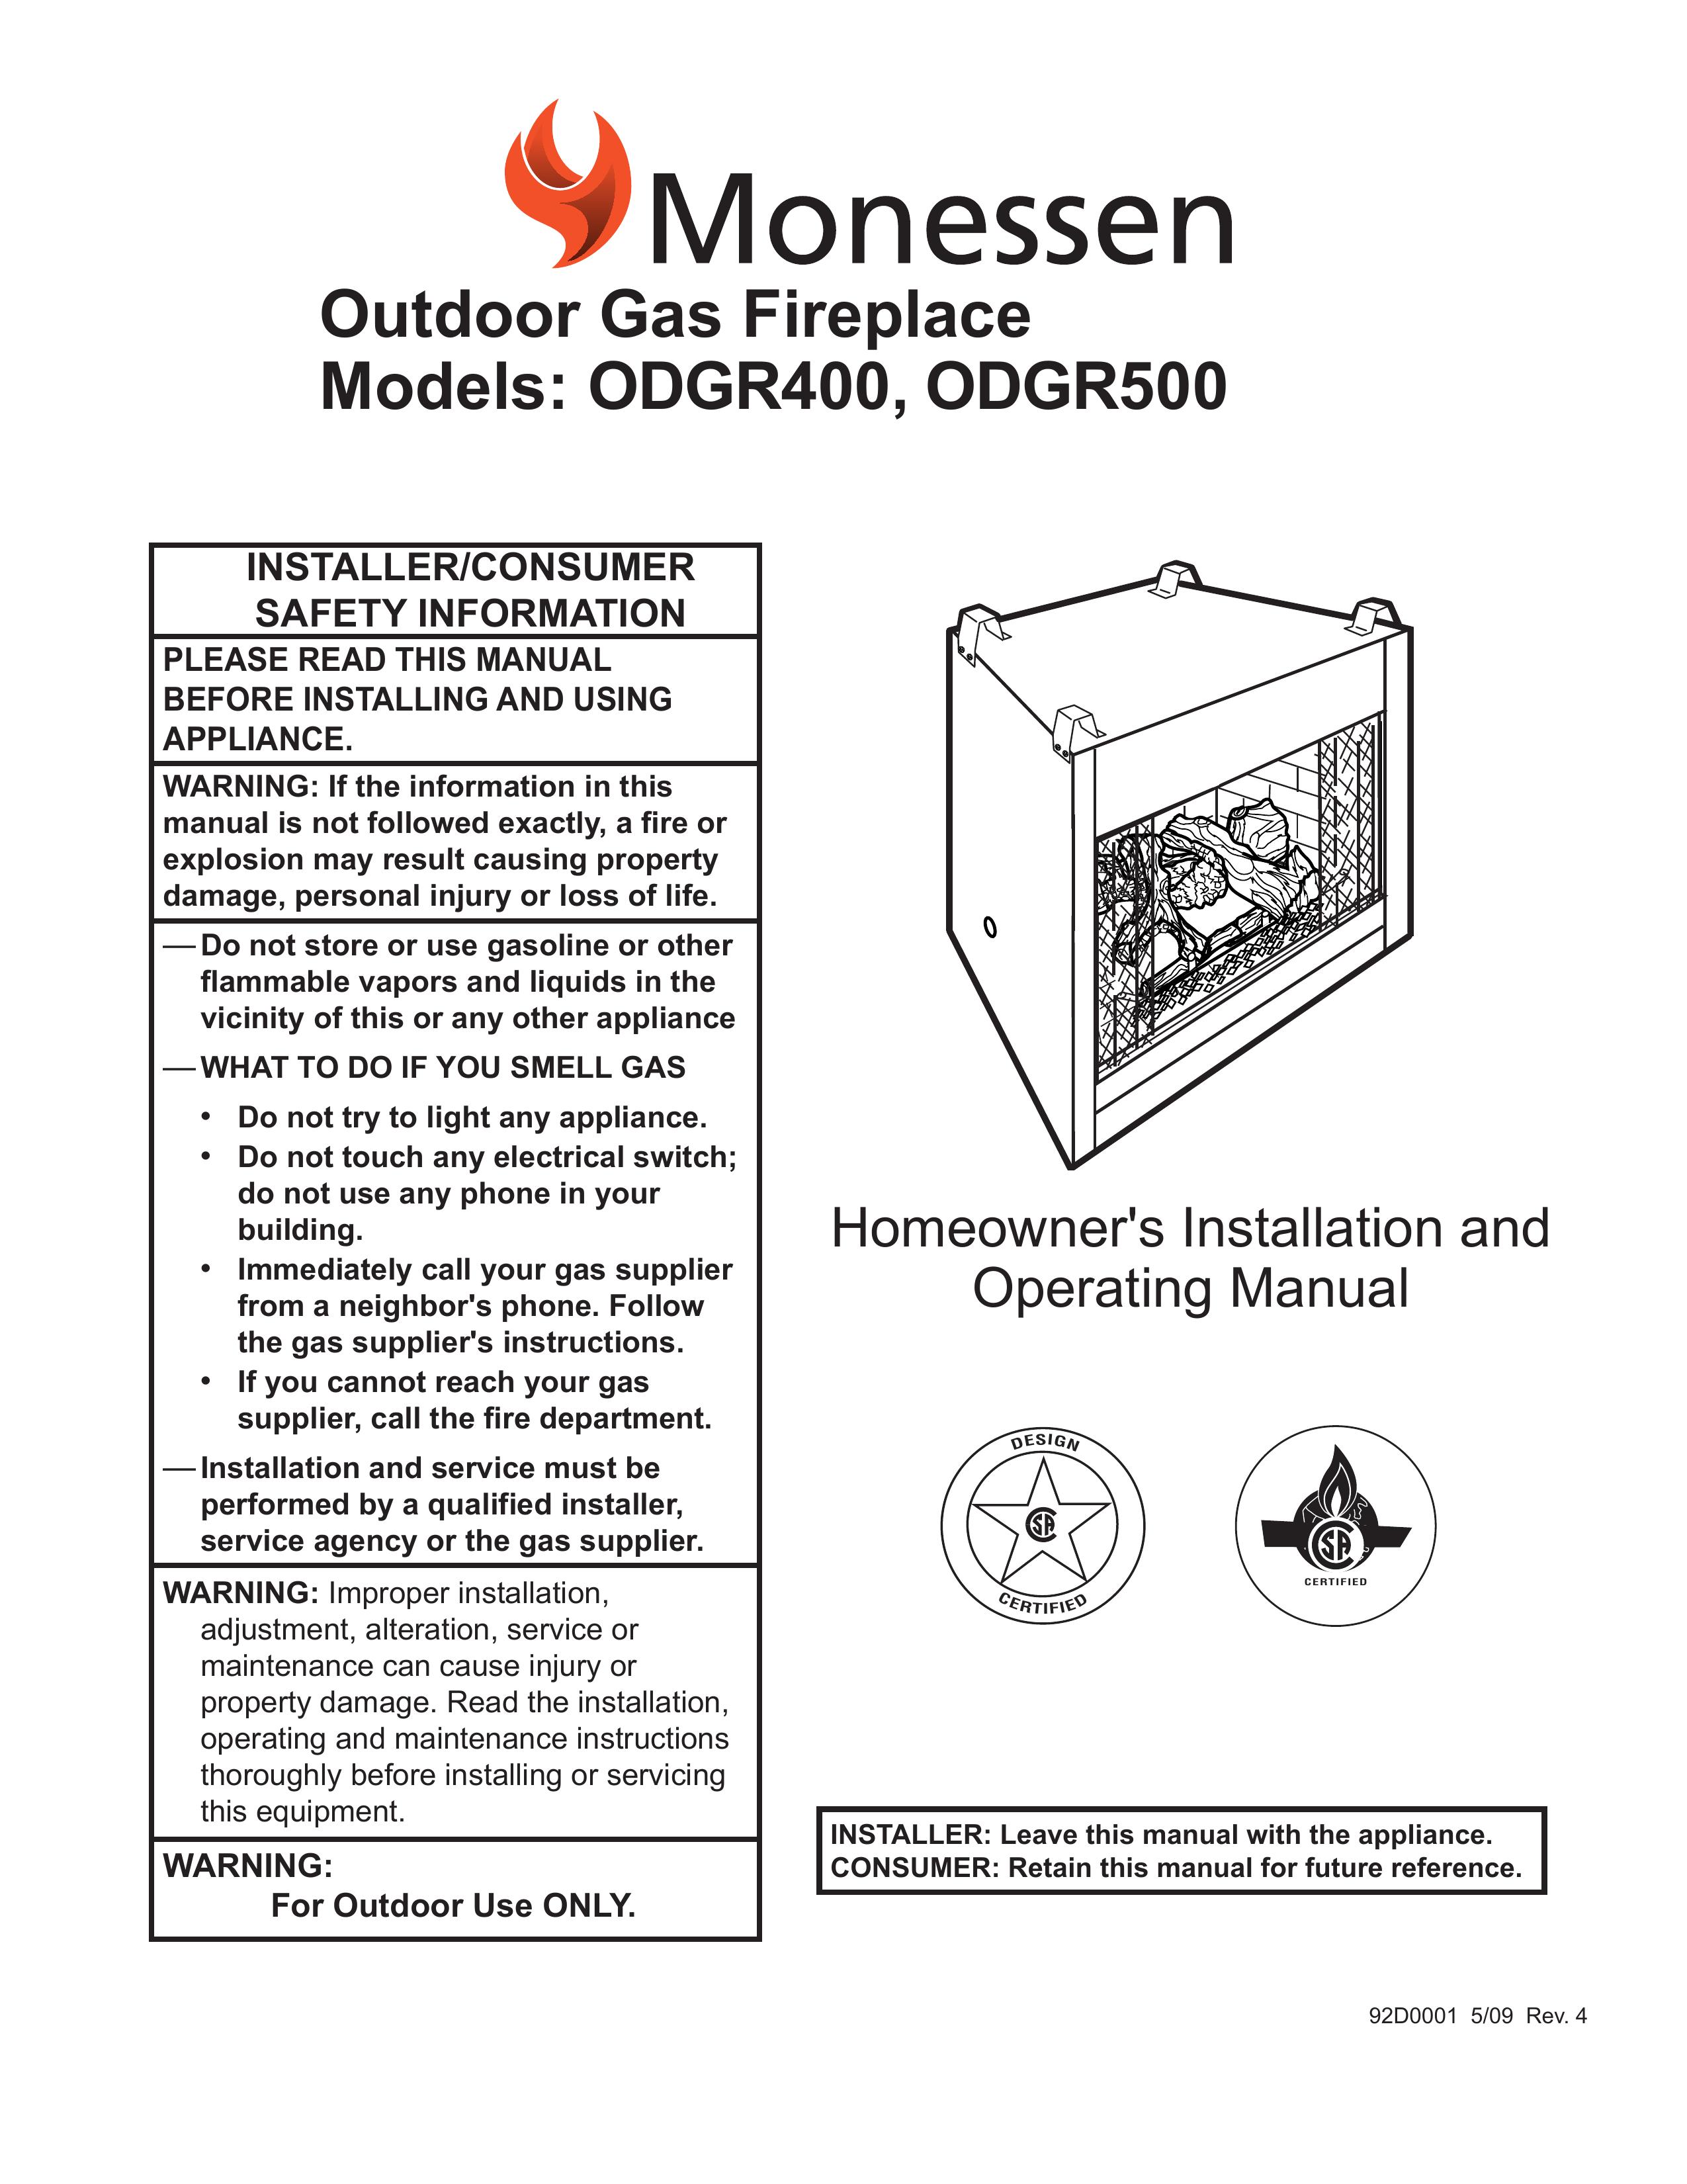 Monessen Hearth ODGR400 Fire Pit User Manual